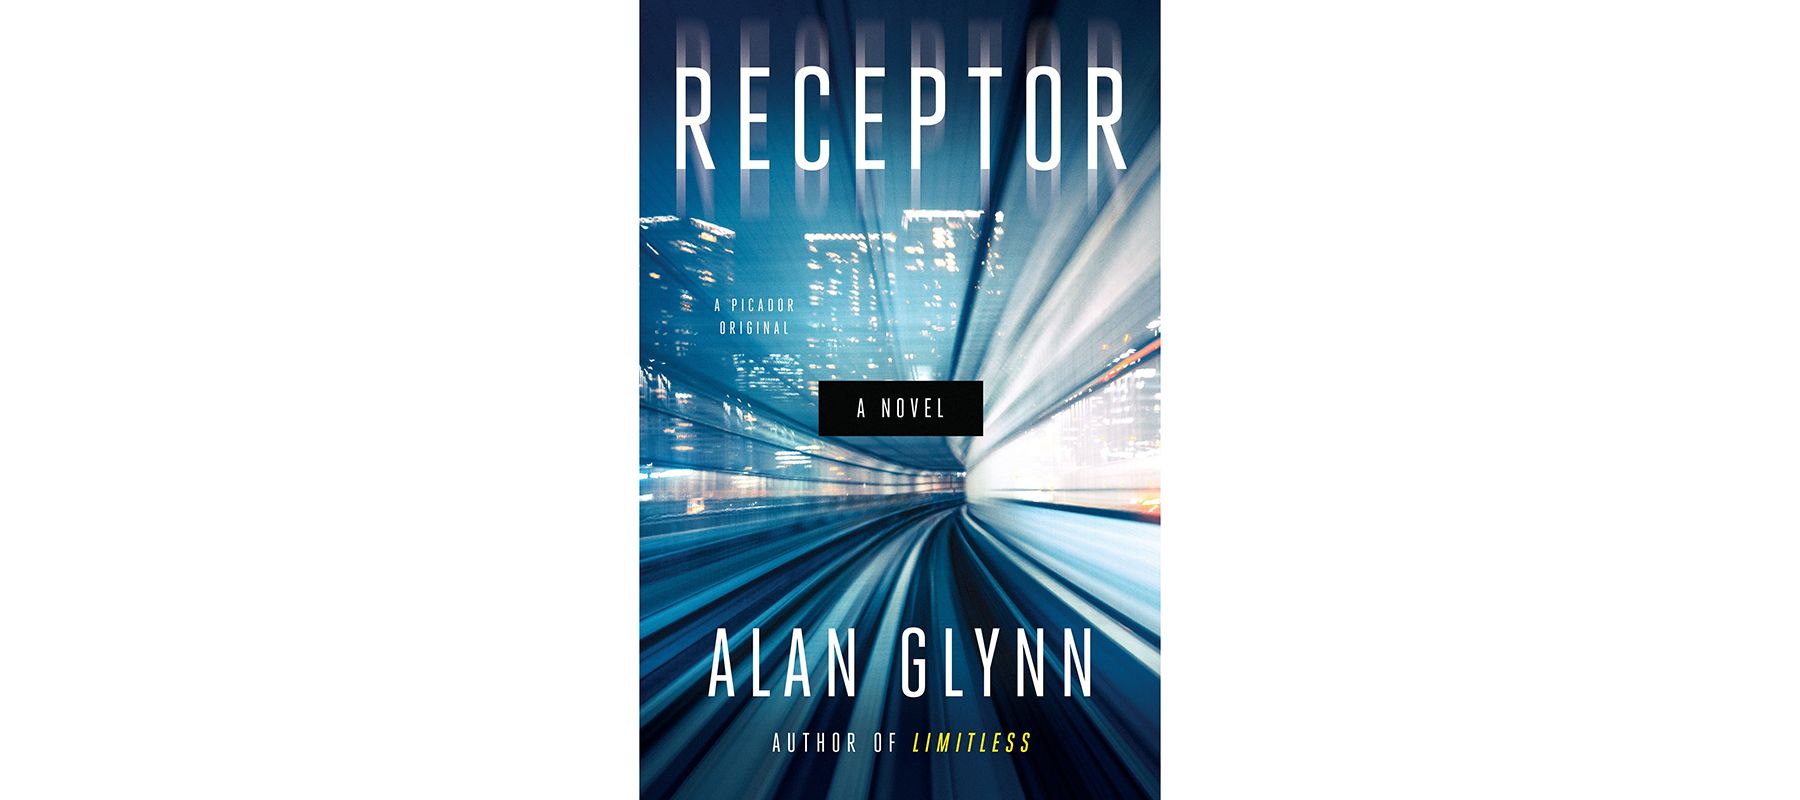 Okładka Receptora, autorstwa Alana Glynn